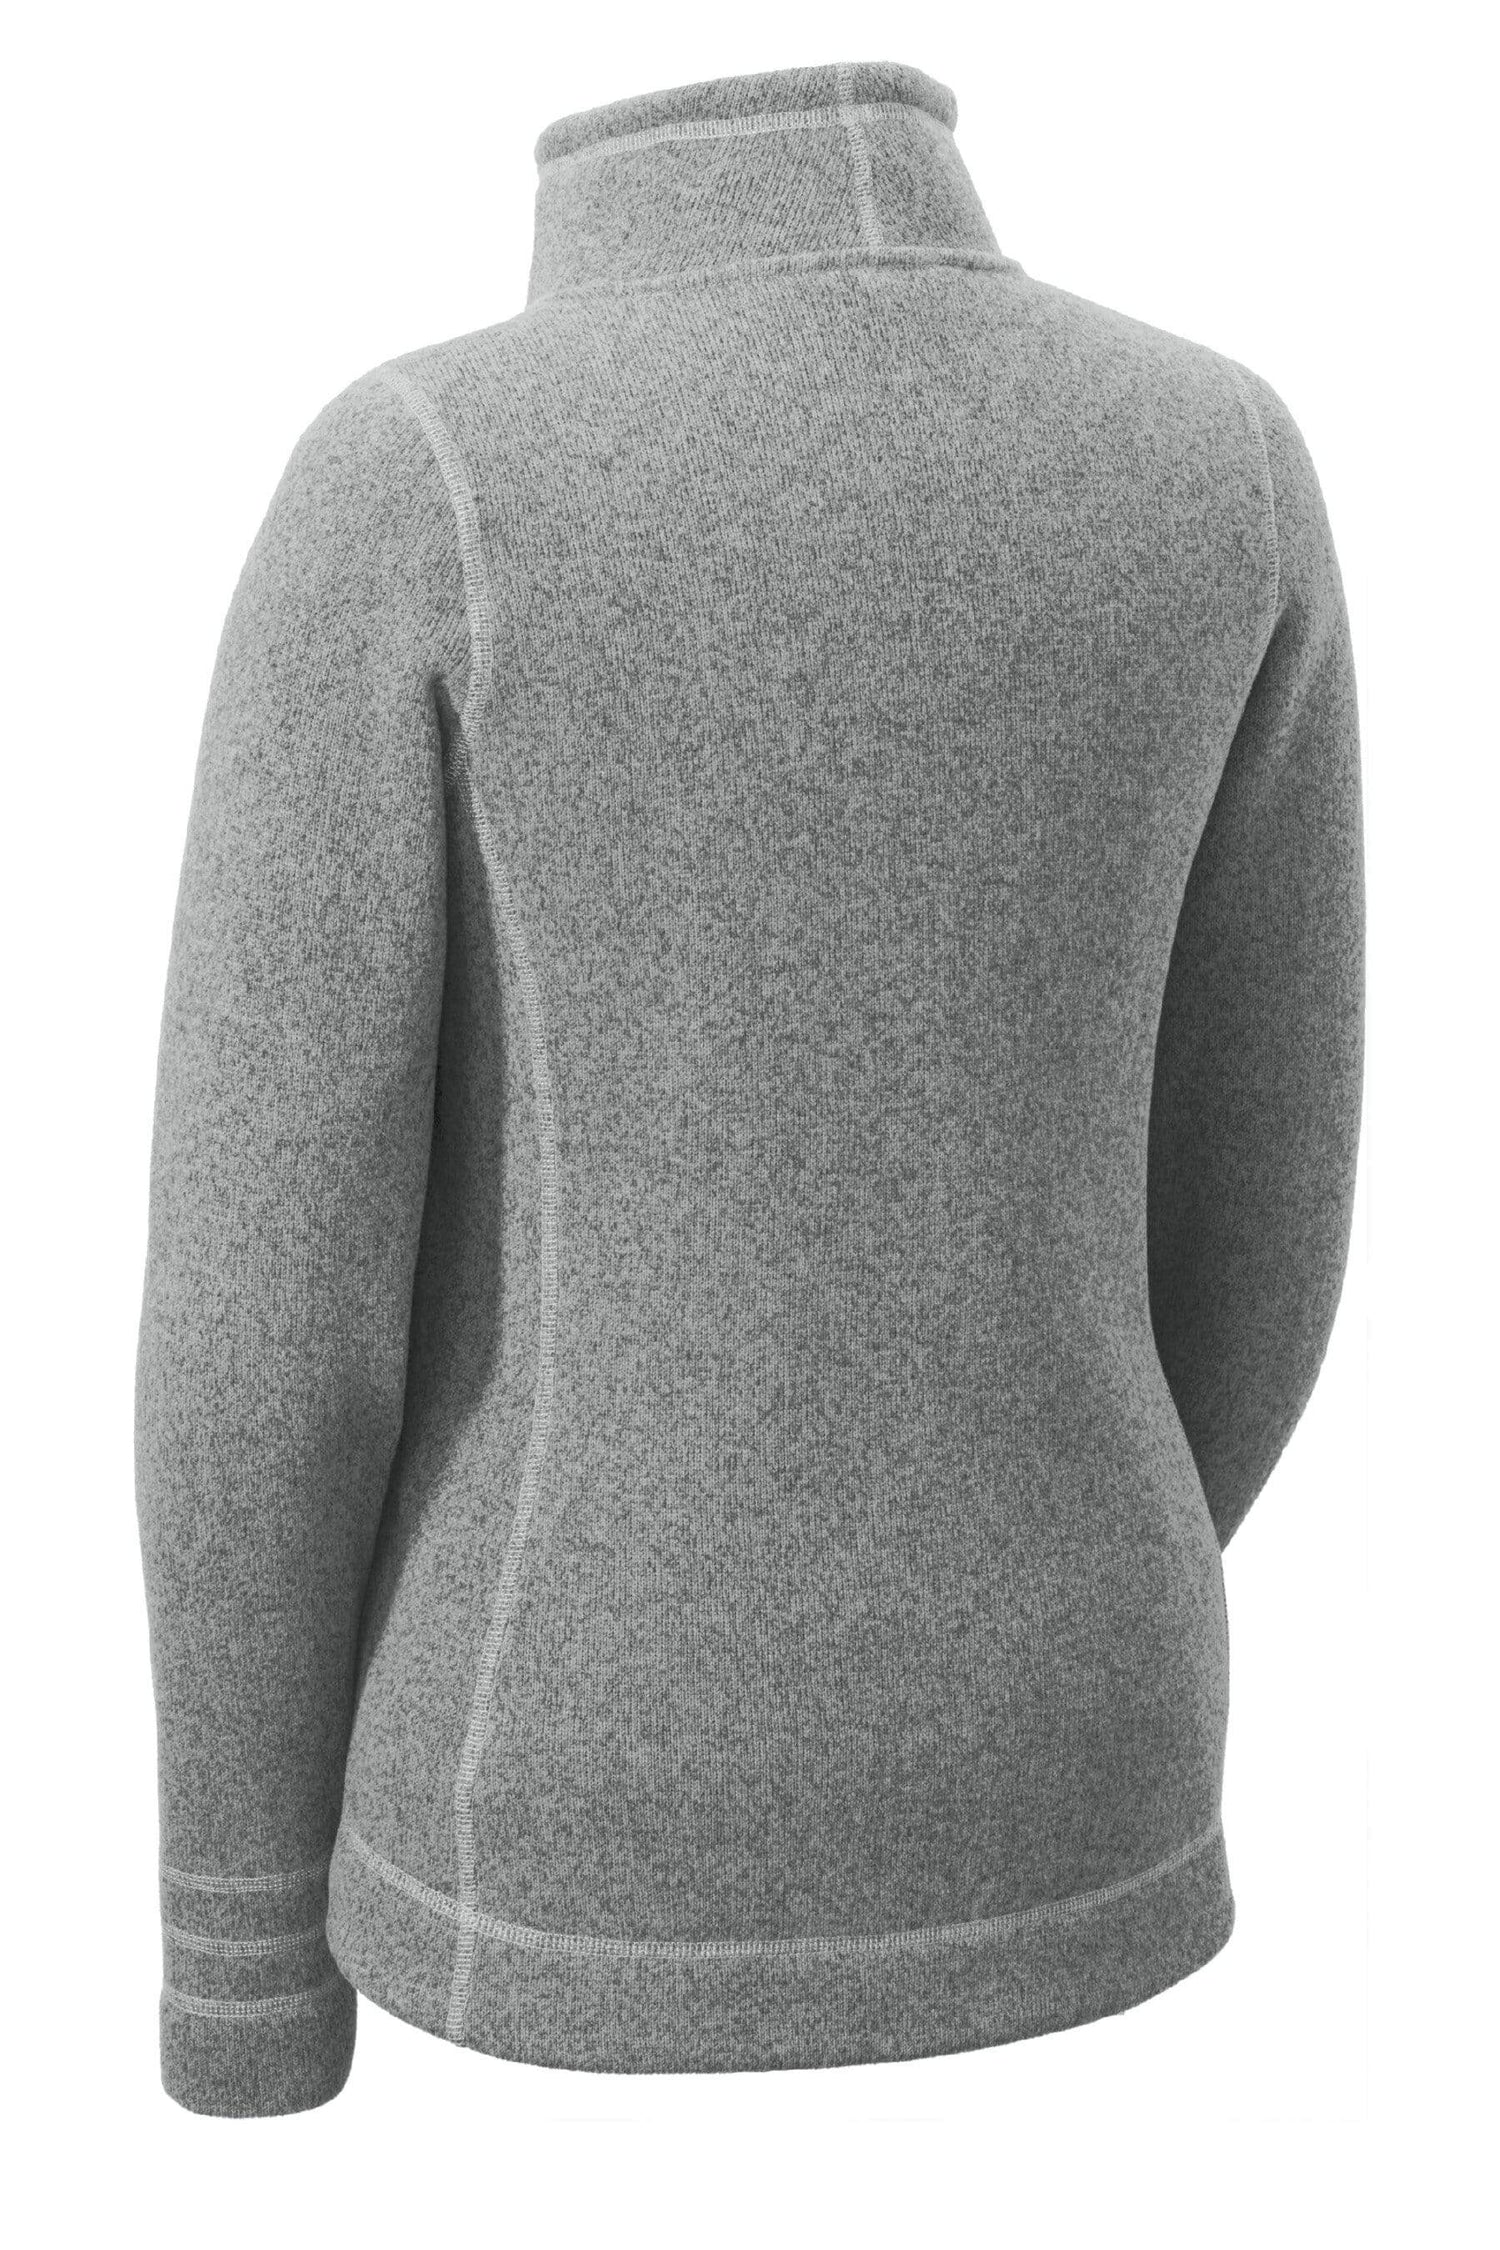 The North Face Women's Black Heather Sweater Fleece Jacket